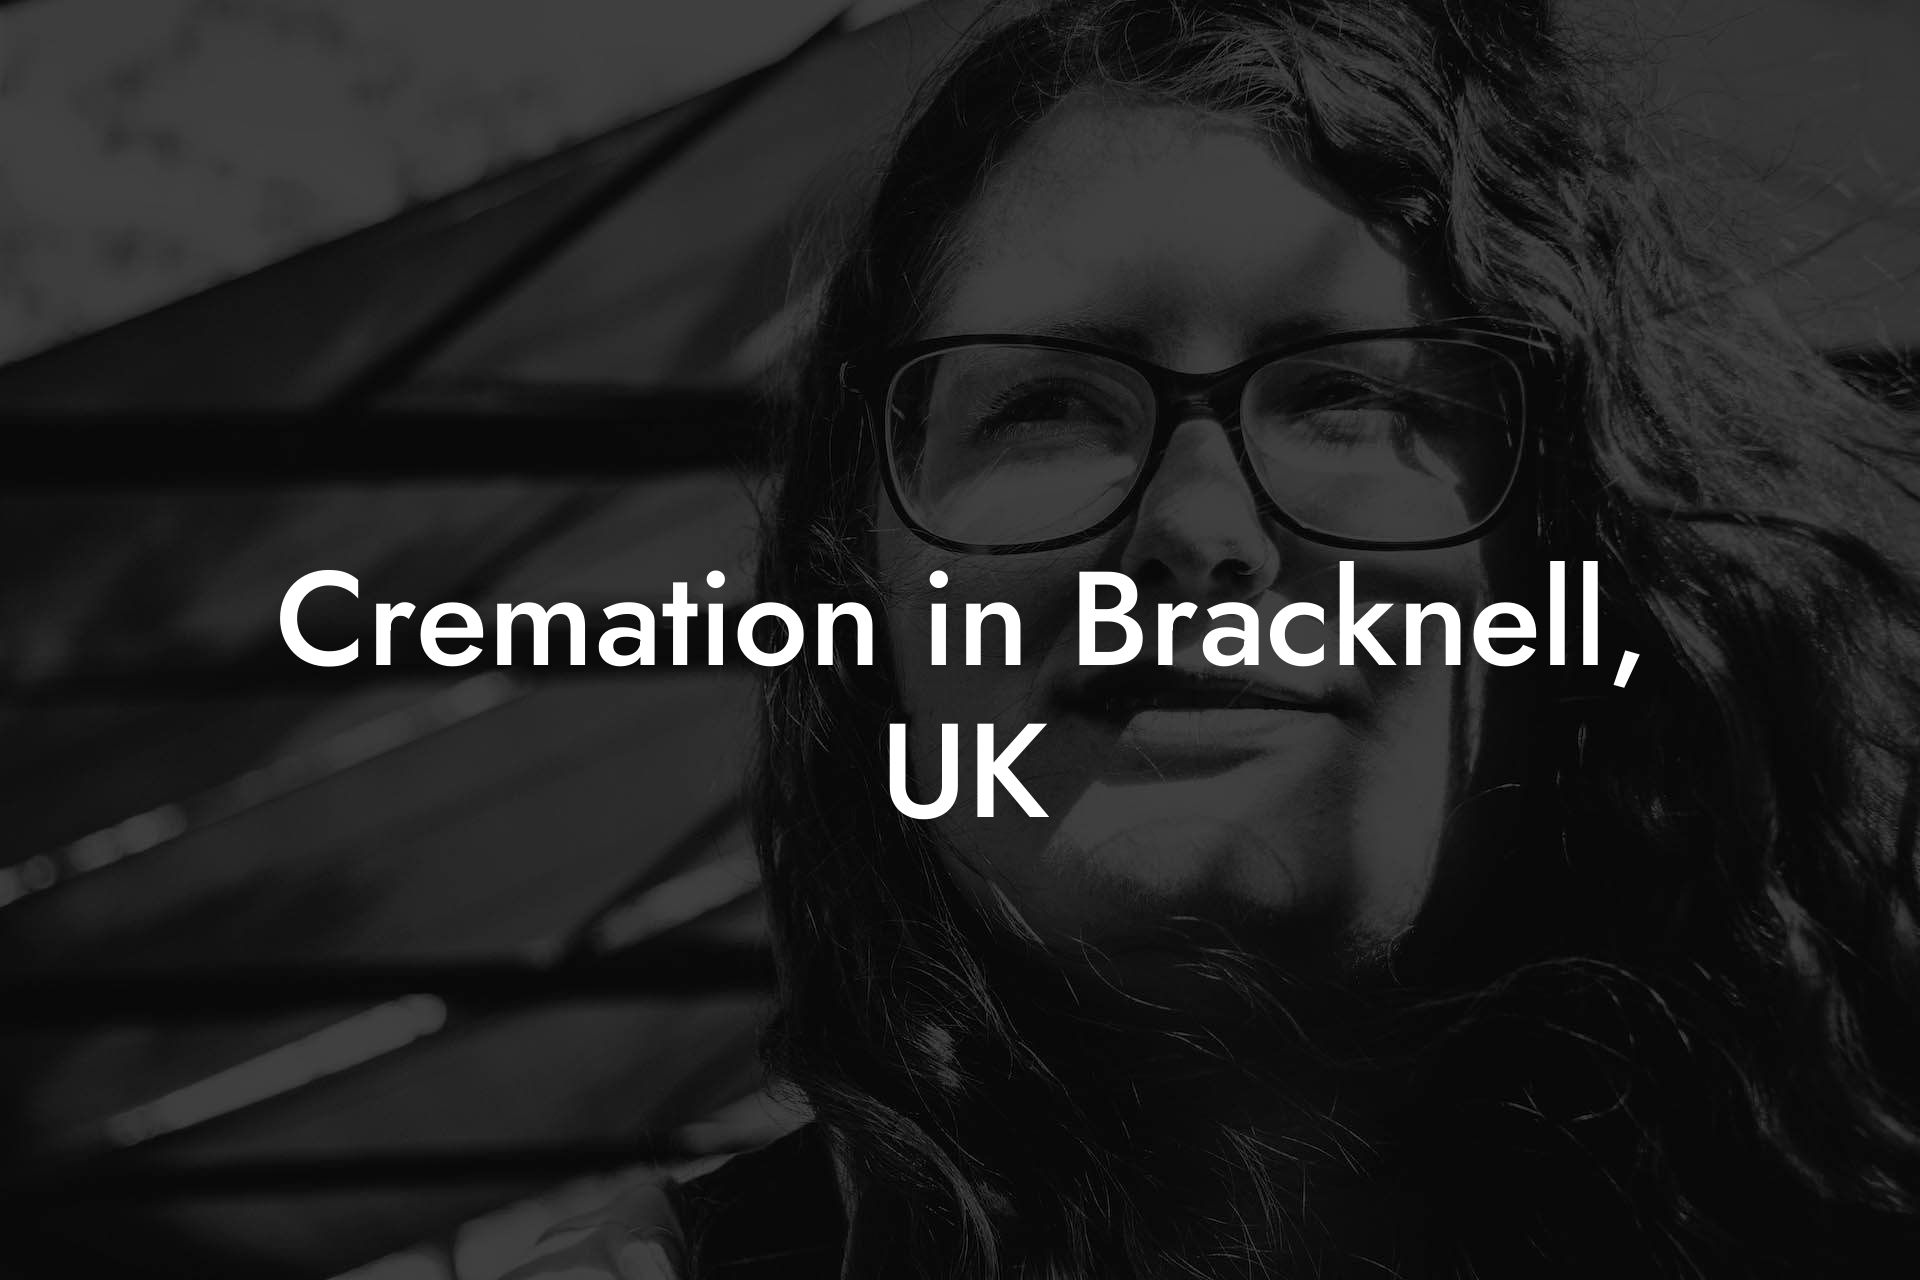 Cremation in Bracknell, UK